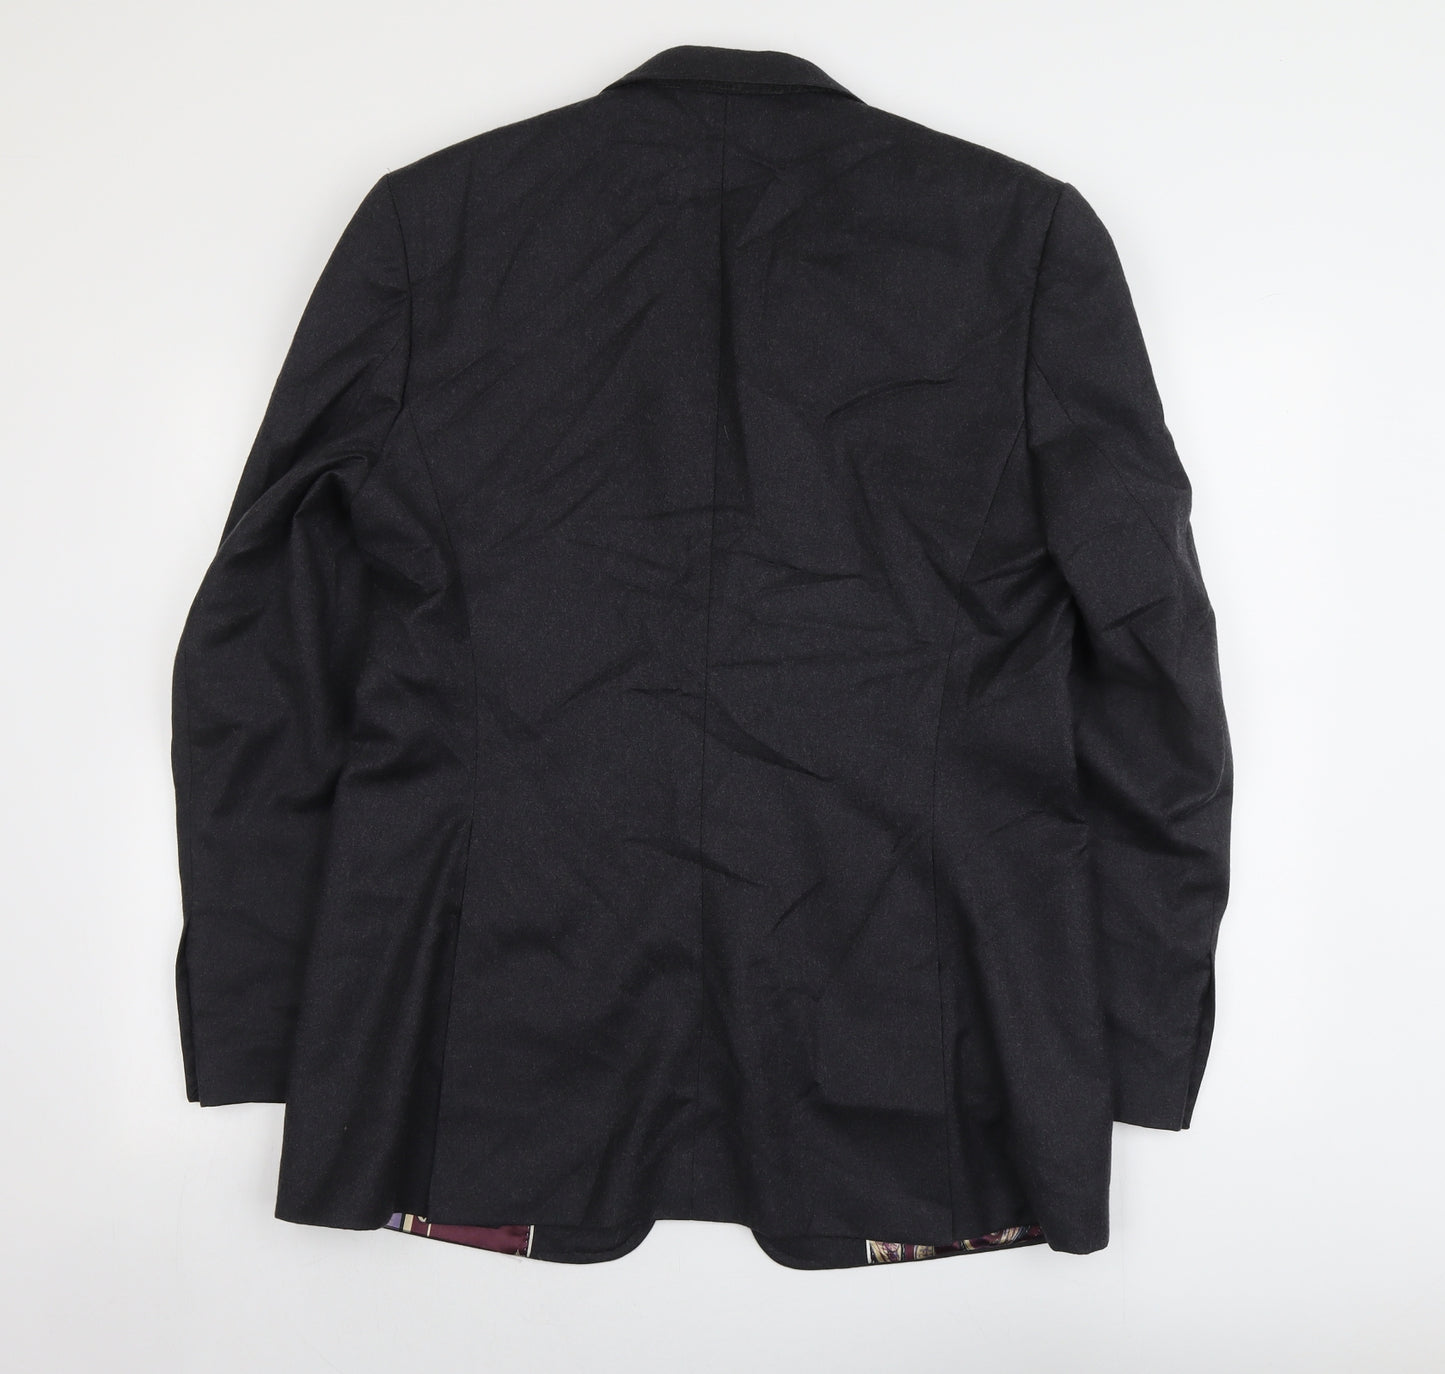 William Hunt Mens Grey Wool Jacket Suit Jacket Size 40 Regular